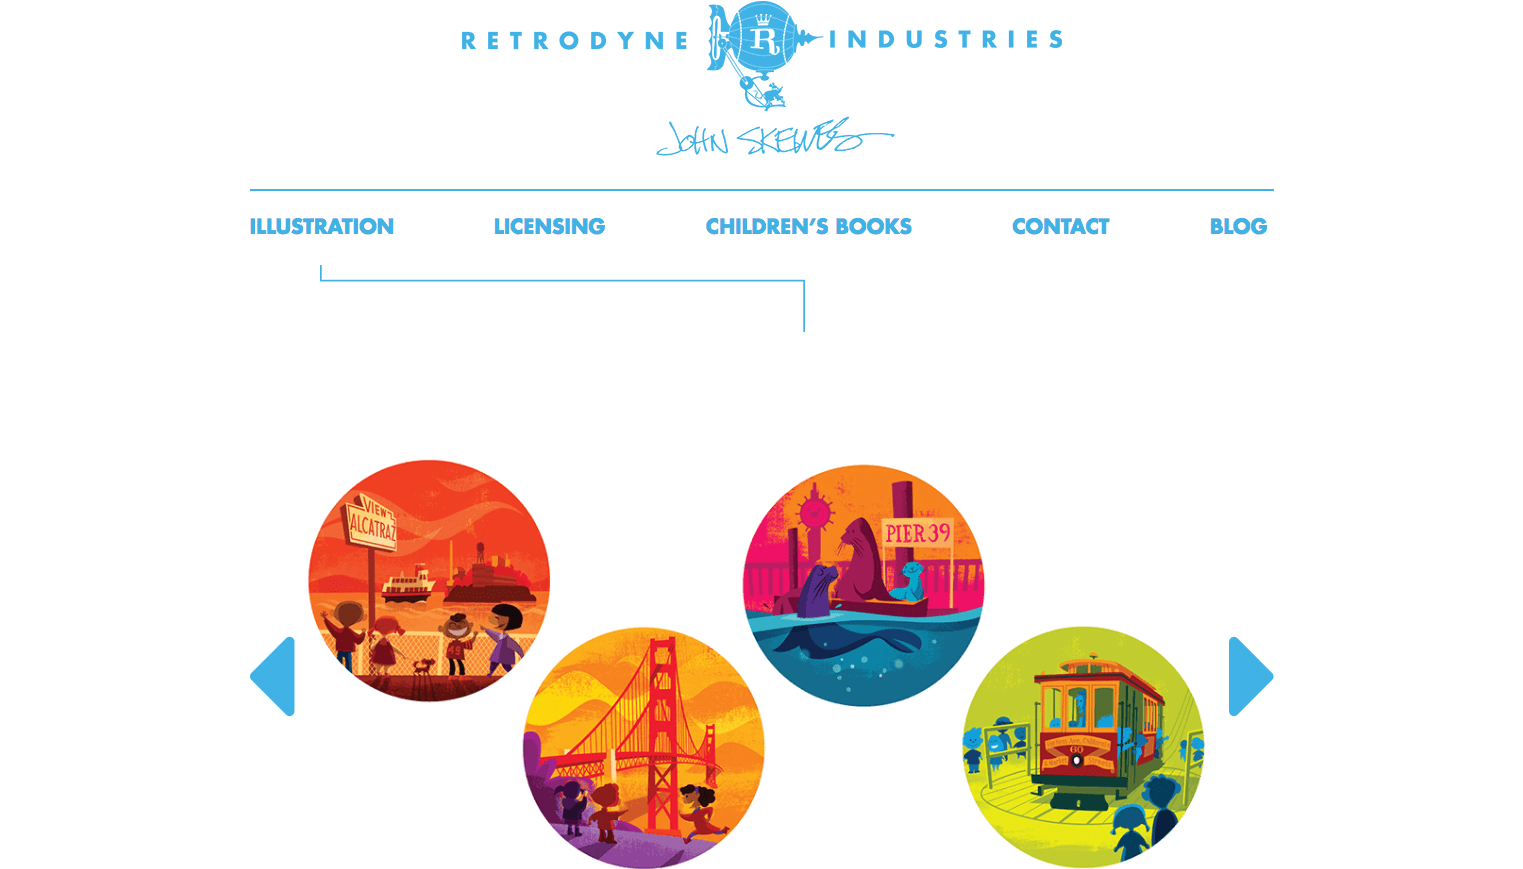 Retrodyne Industries